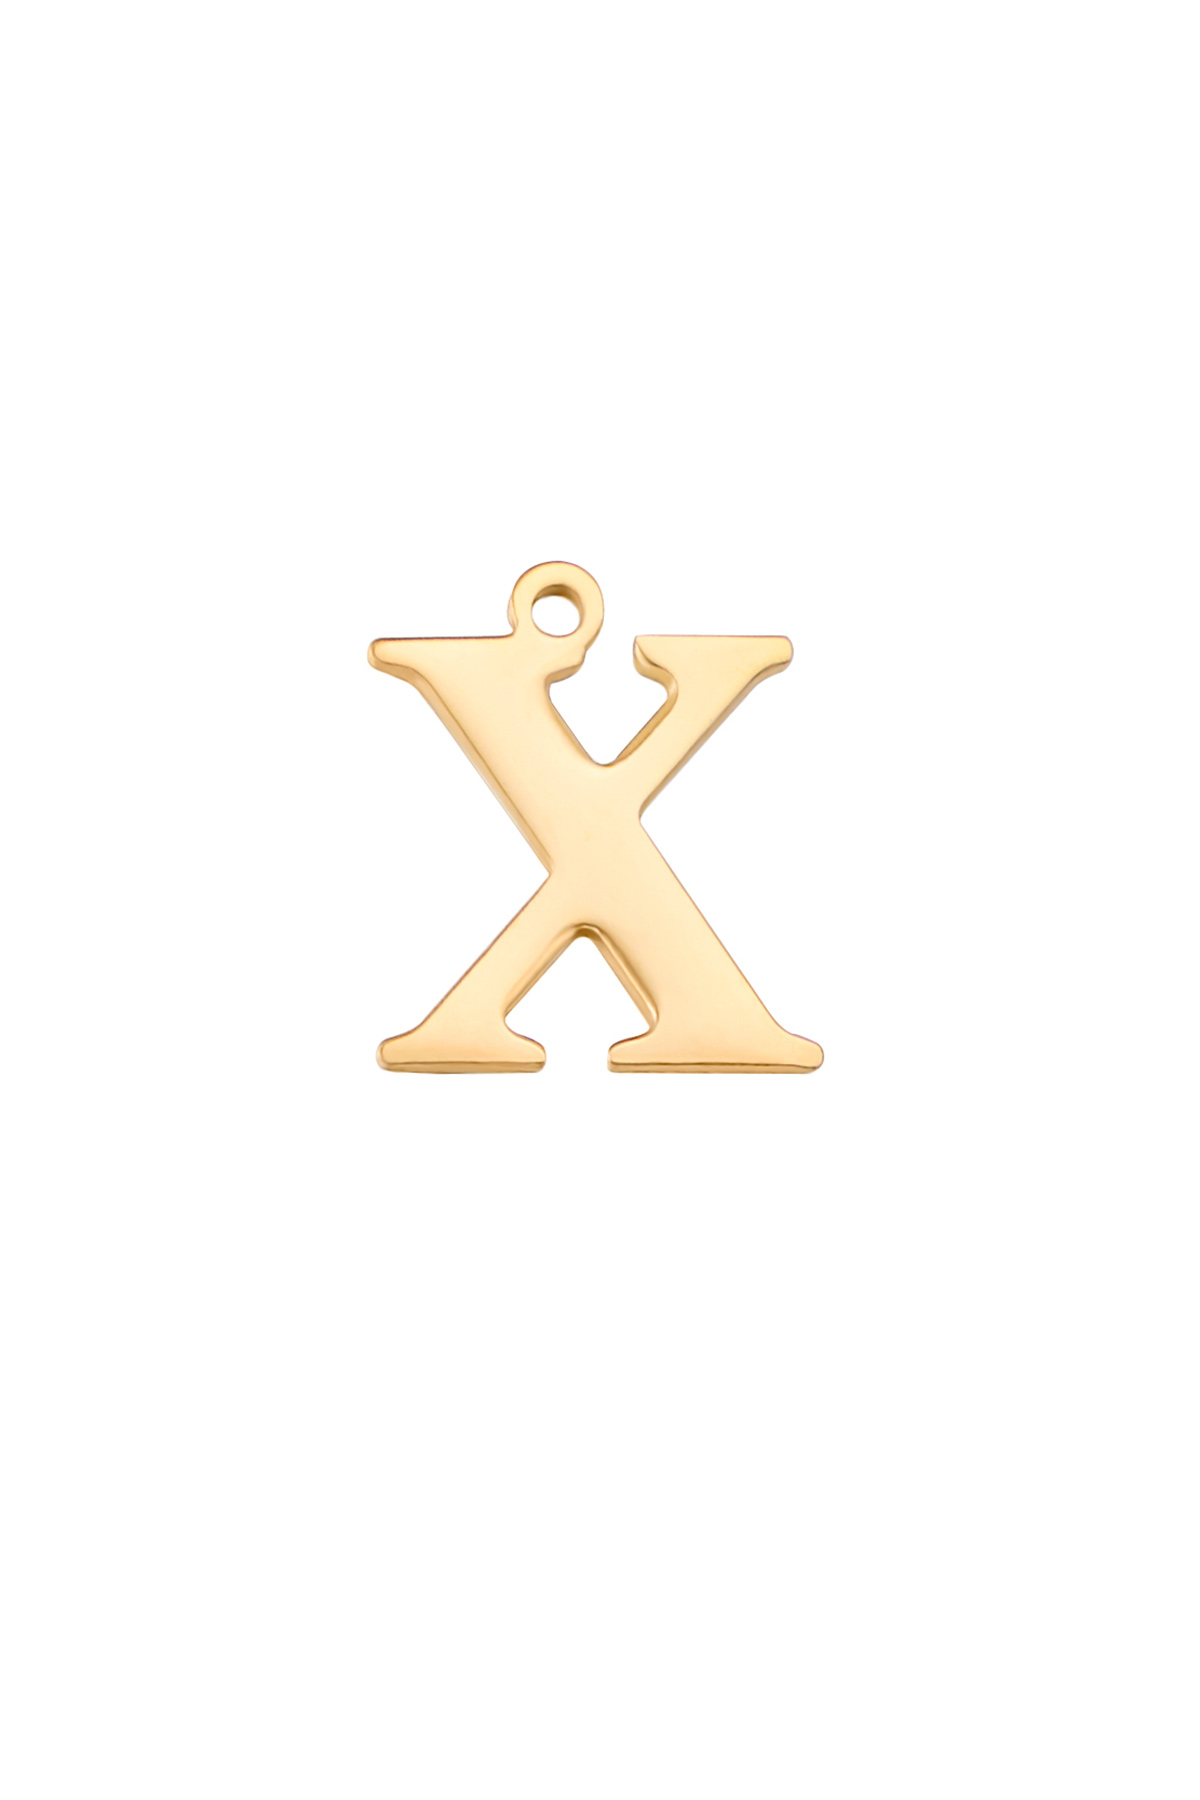 Gold / Charm basic X - altın Resim40